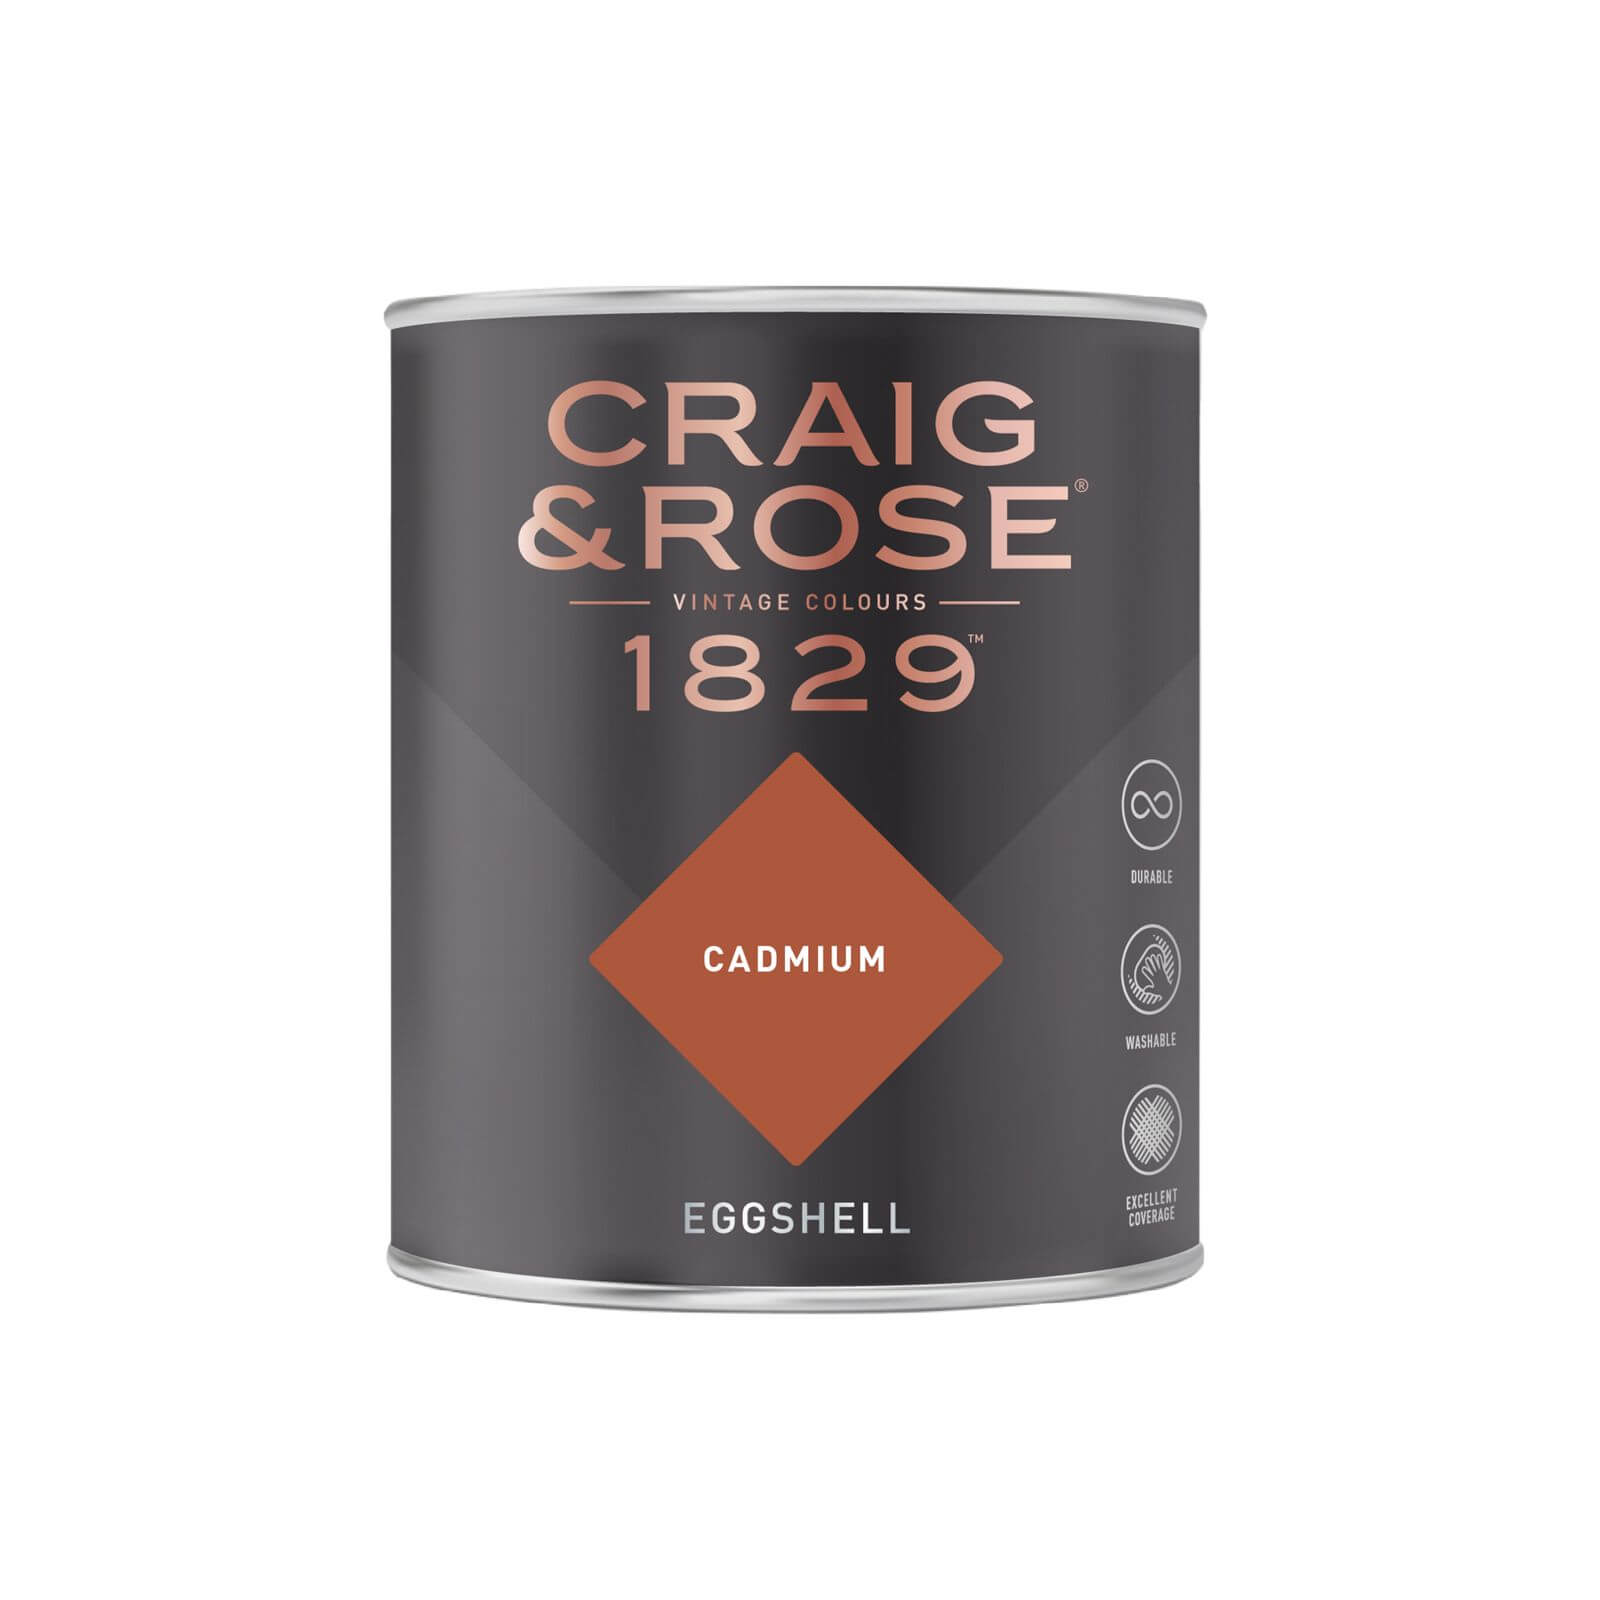 Craig & Rose 1829 Eggshell Paint Cadmium - 750ml